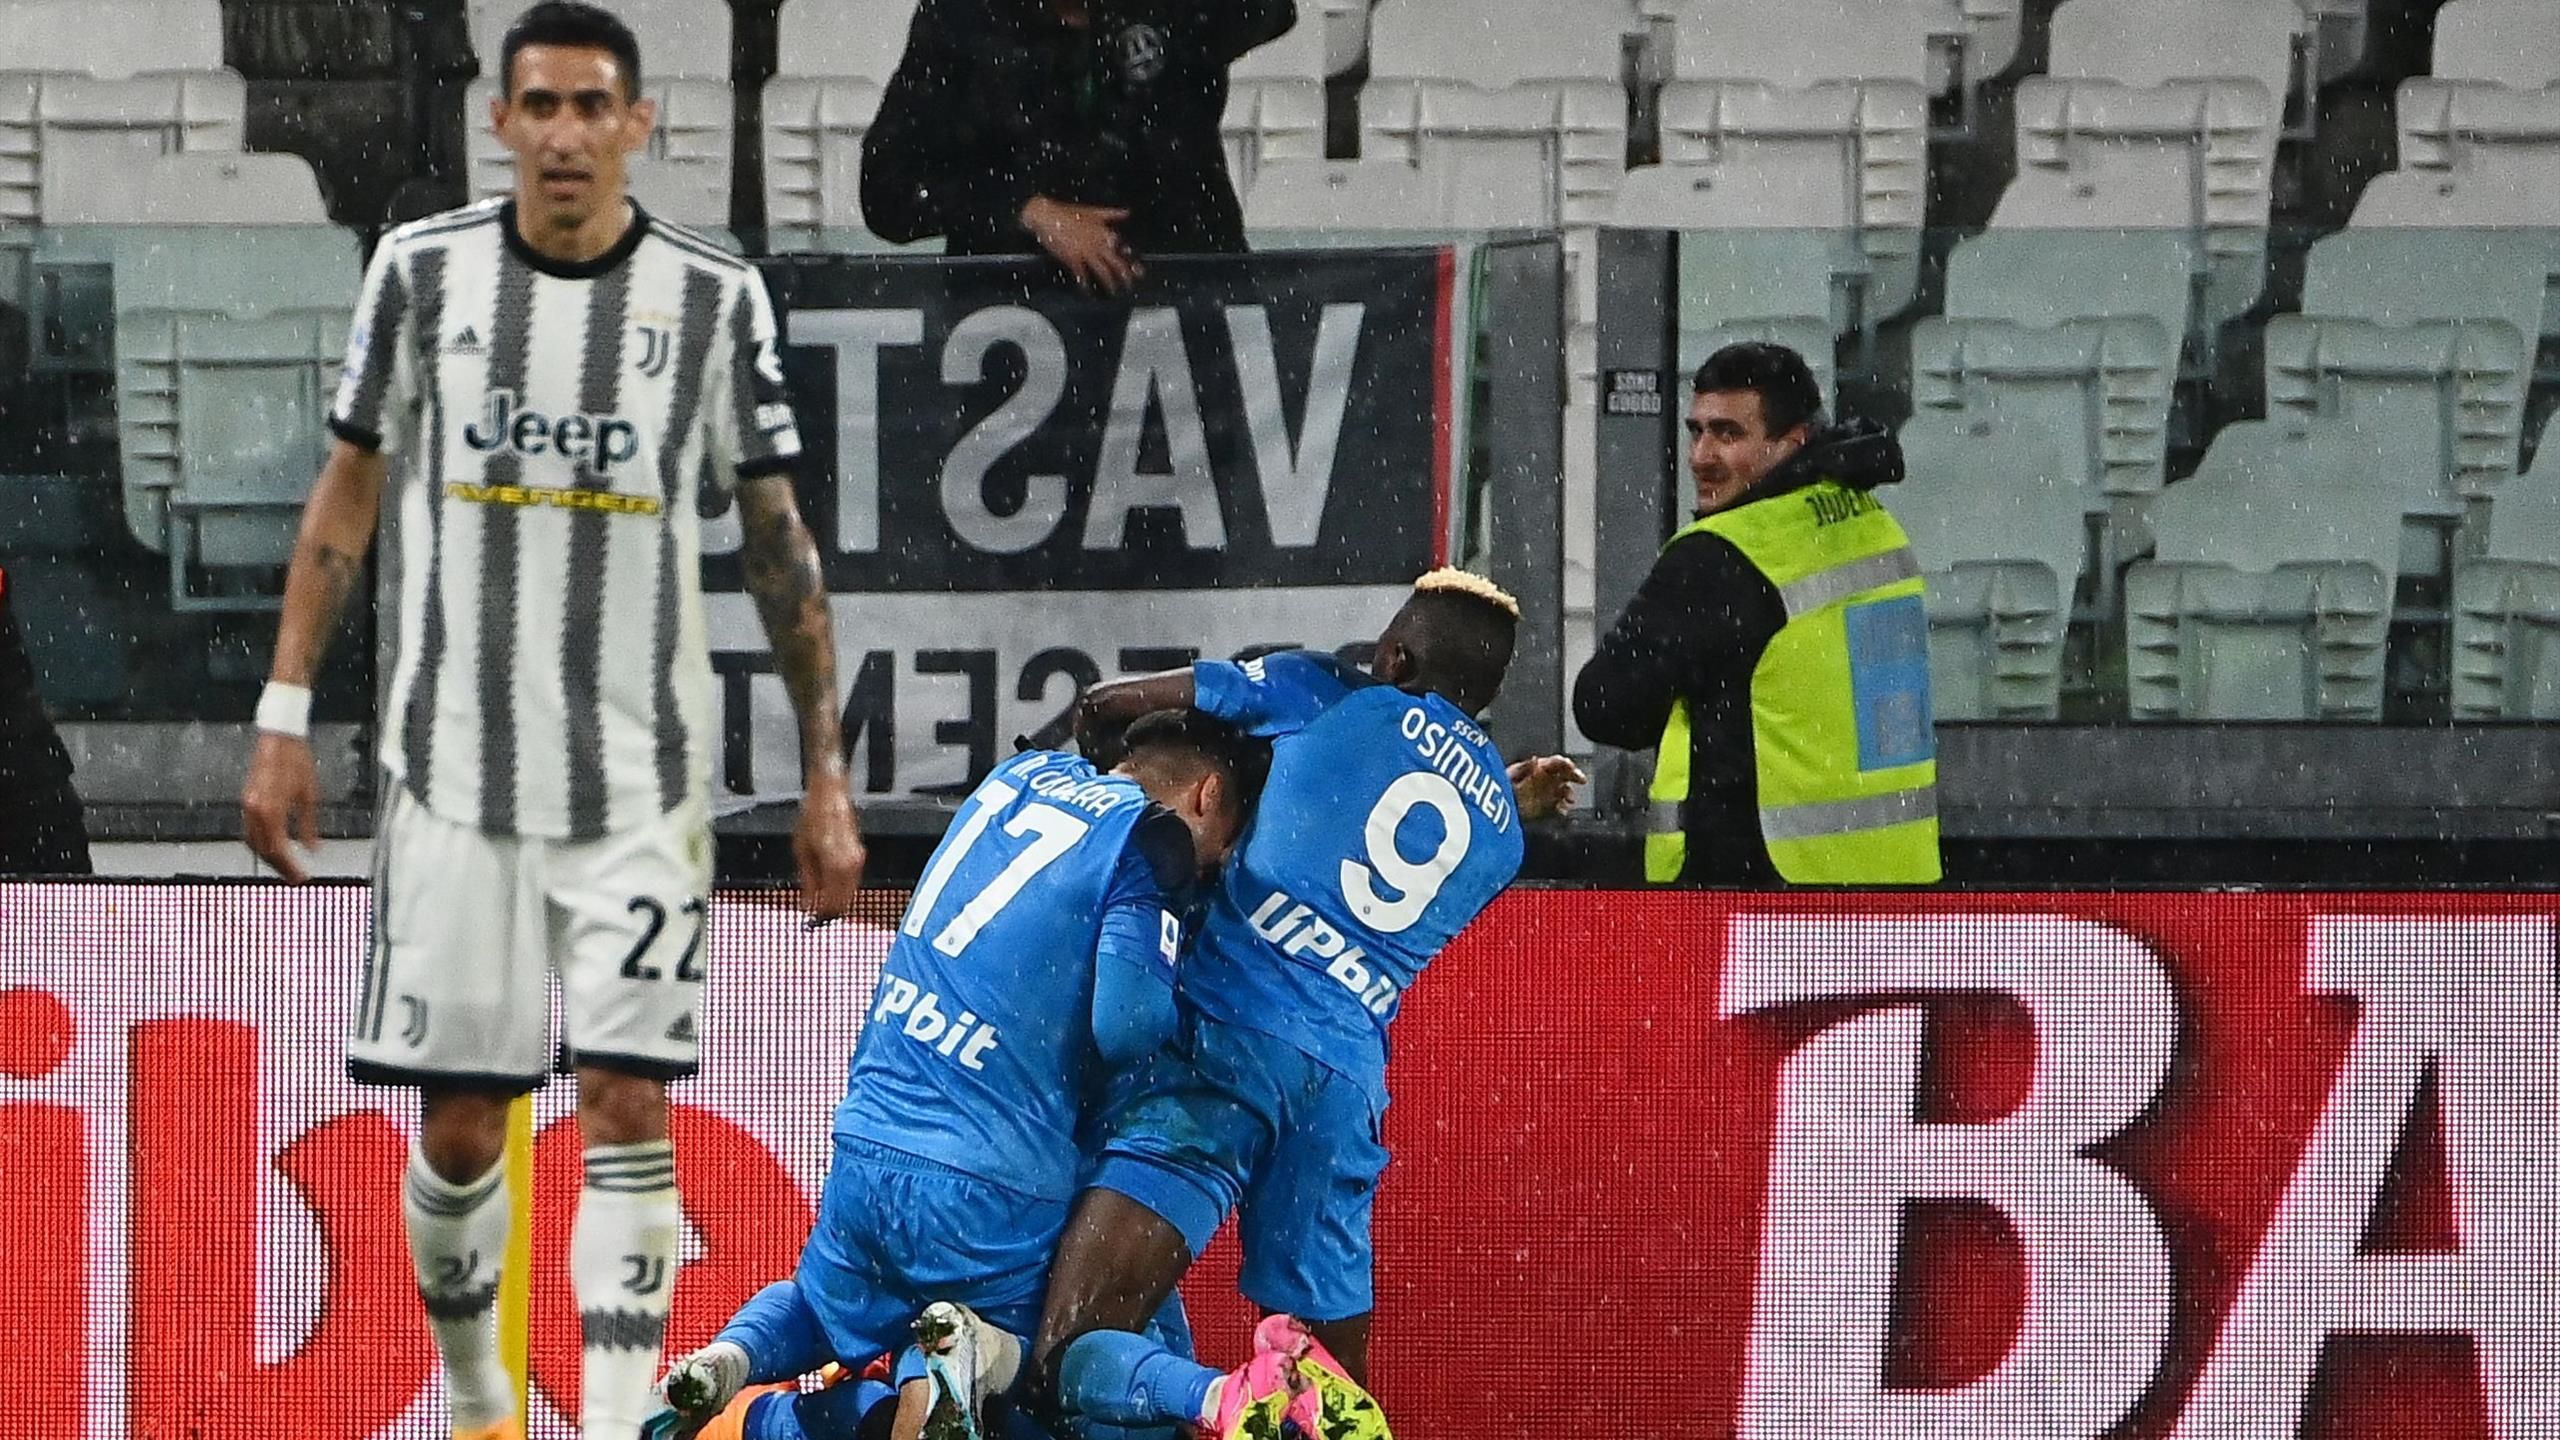 Torino vs. Napoli: Extended Highlights, Serie A